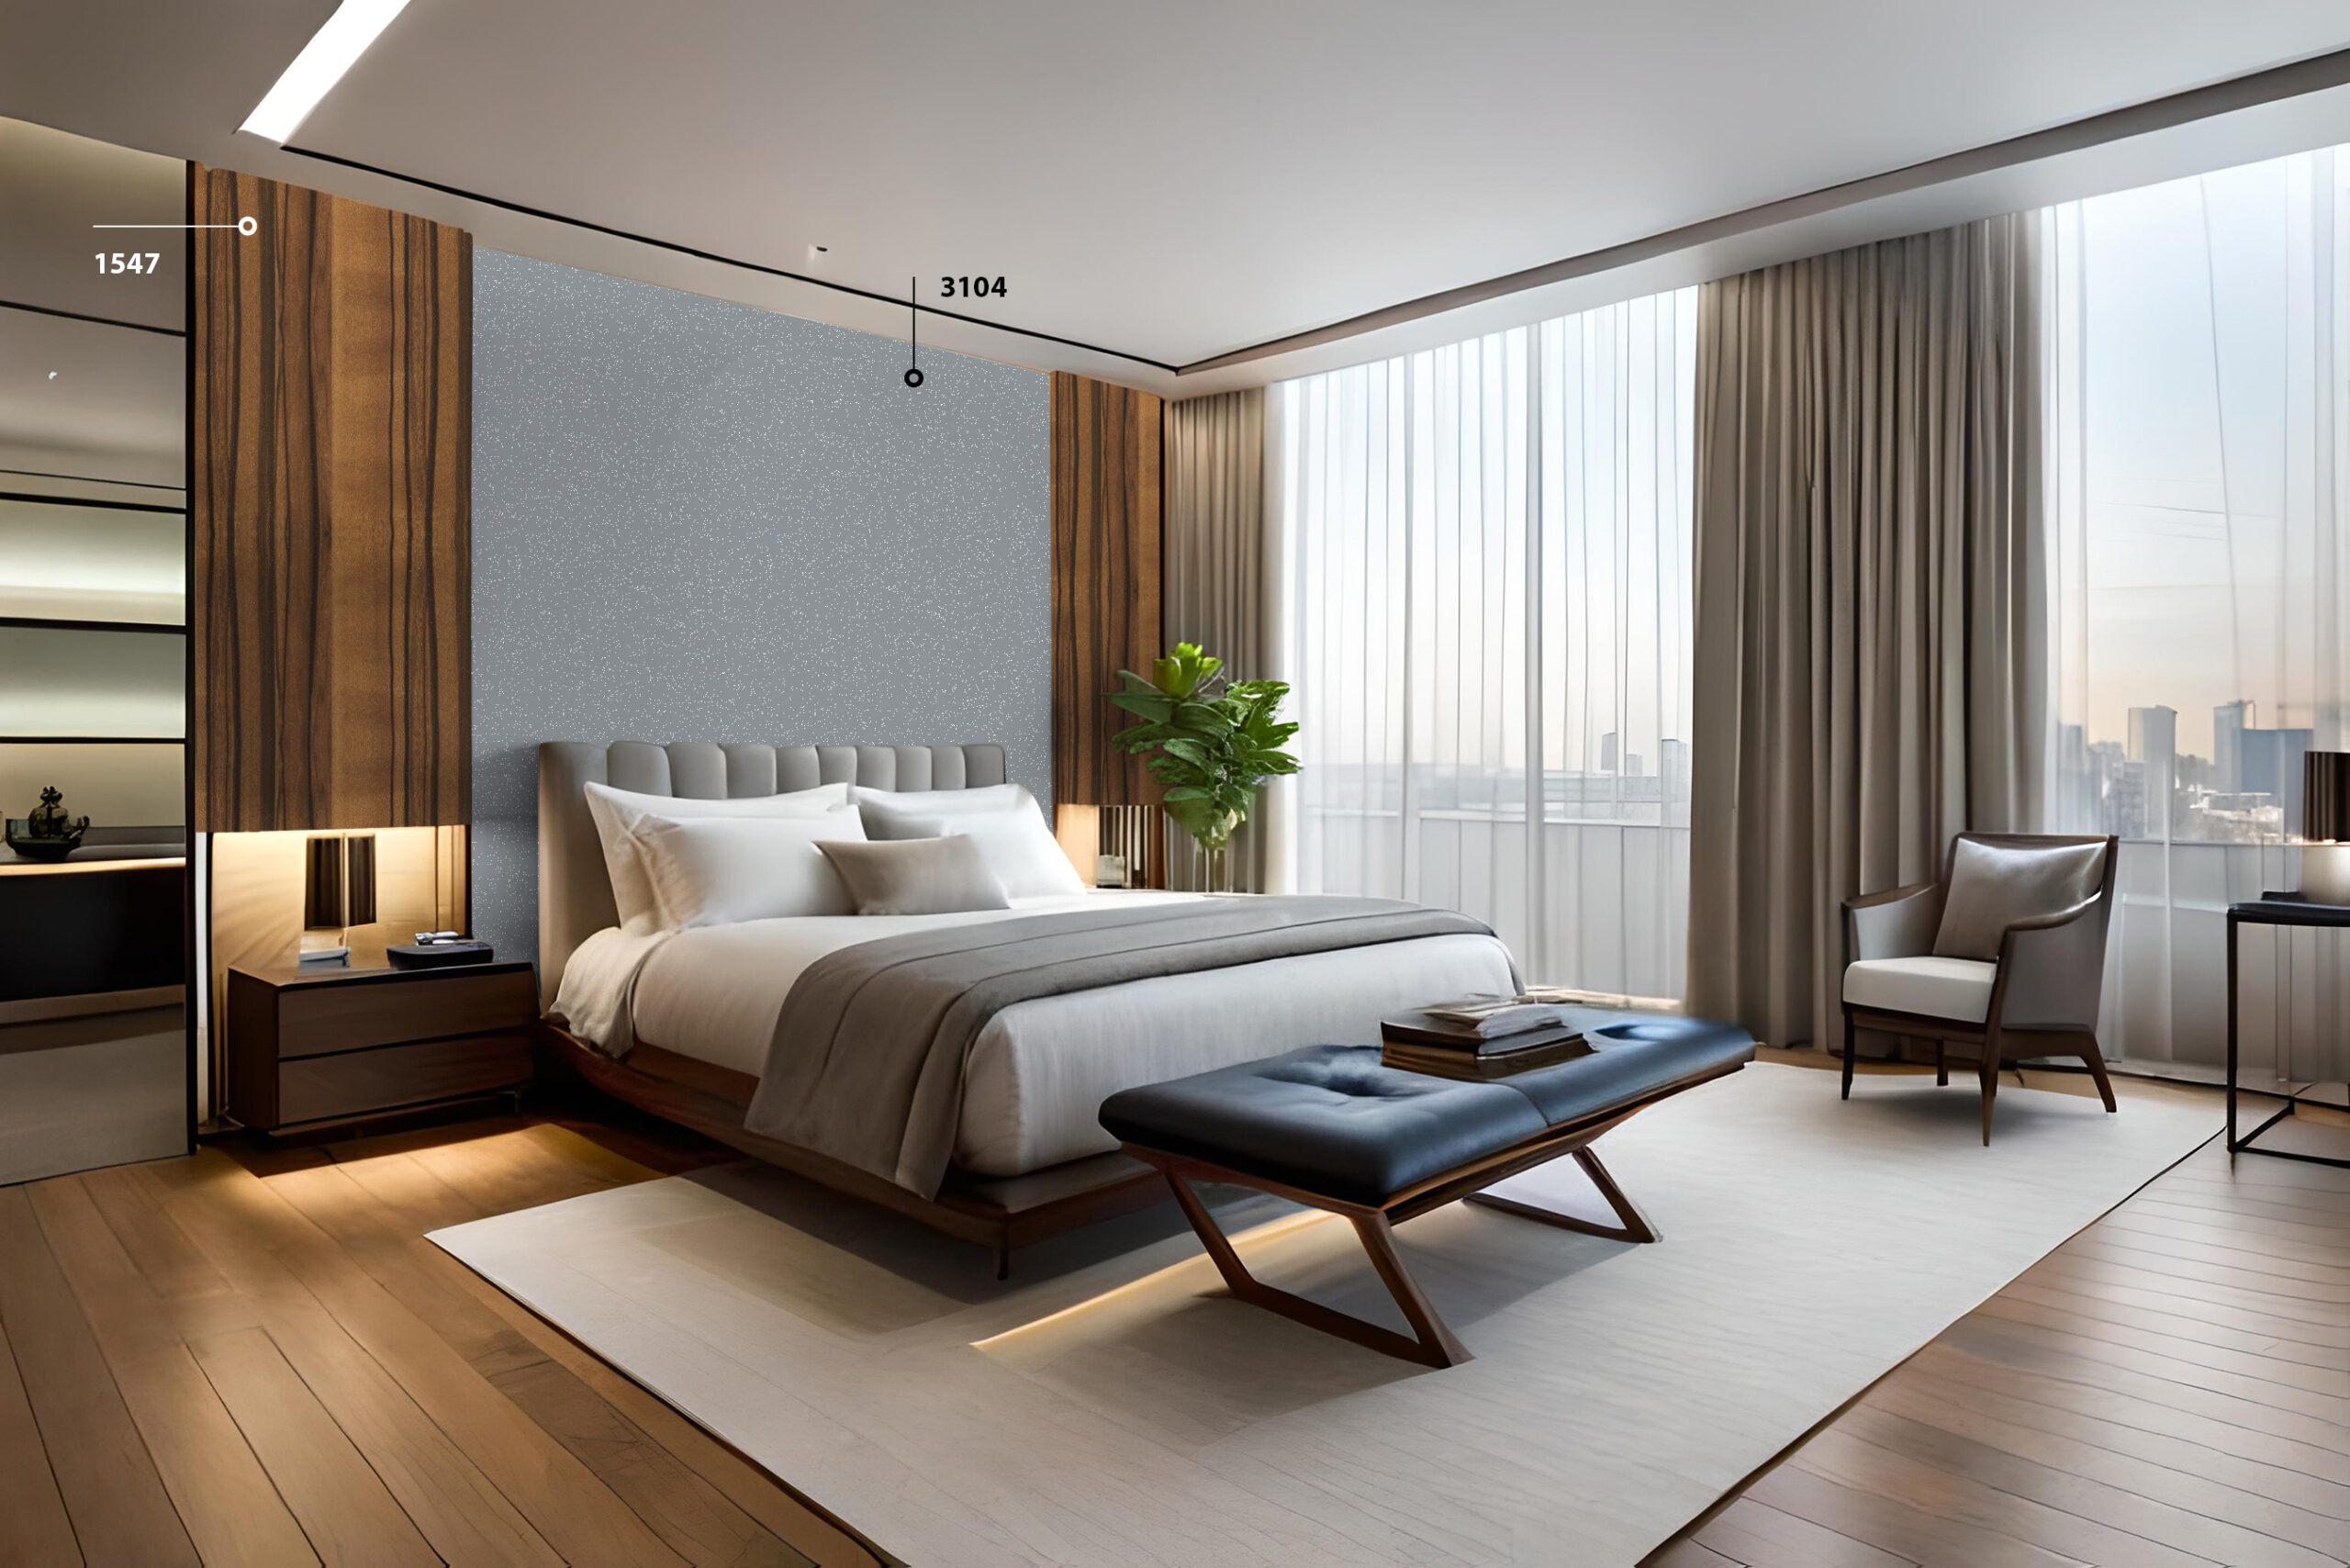 20 Best Interior Design Tips for Home Decor